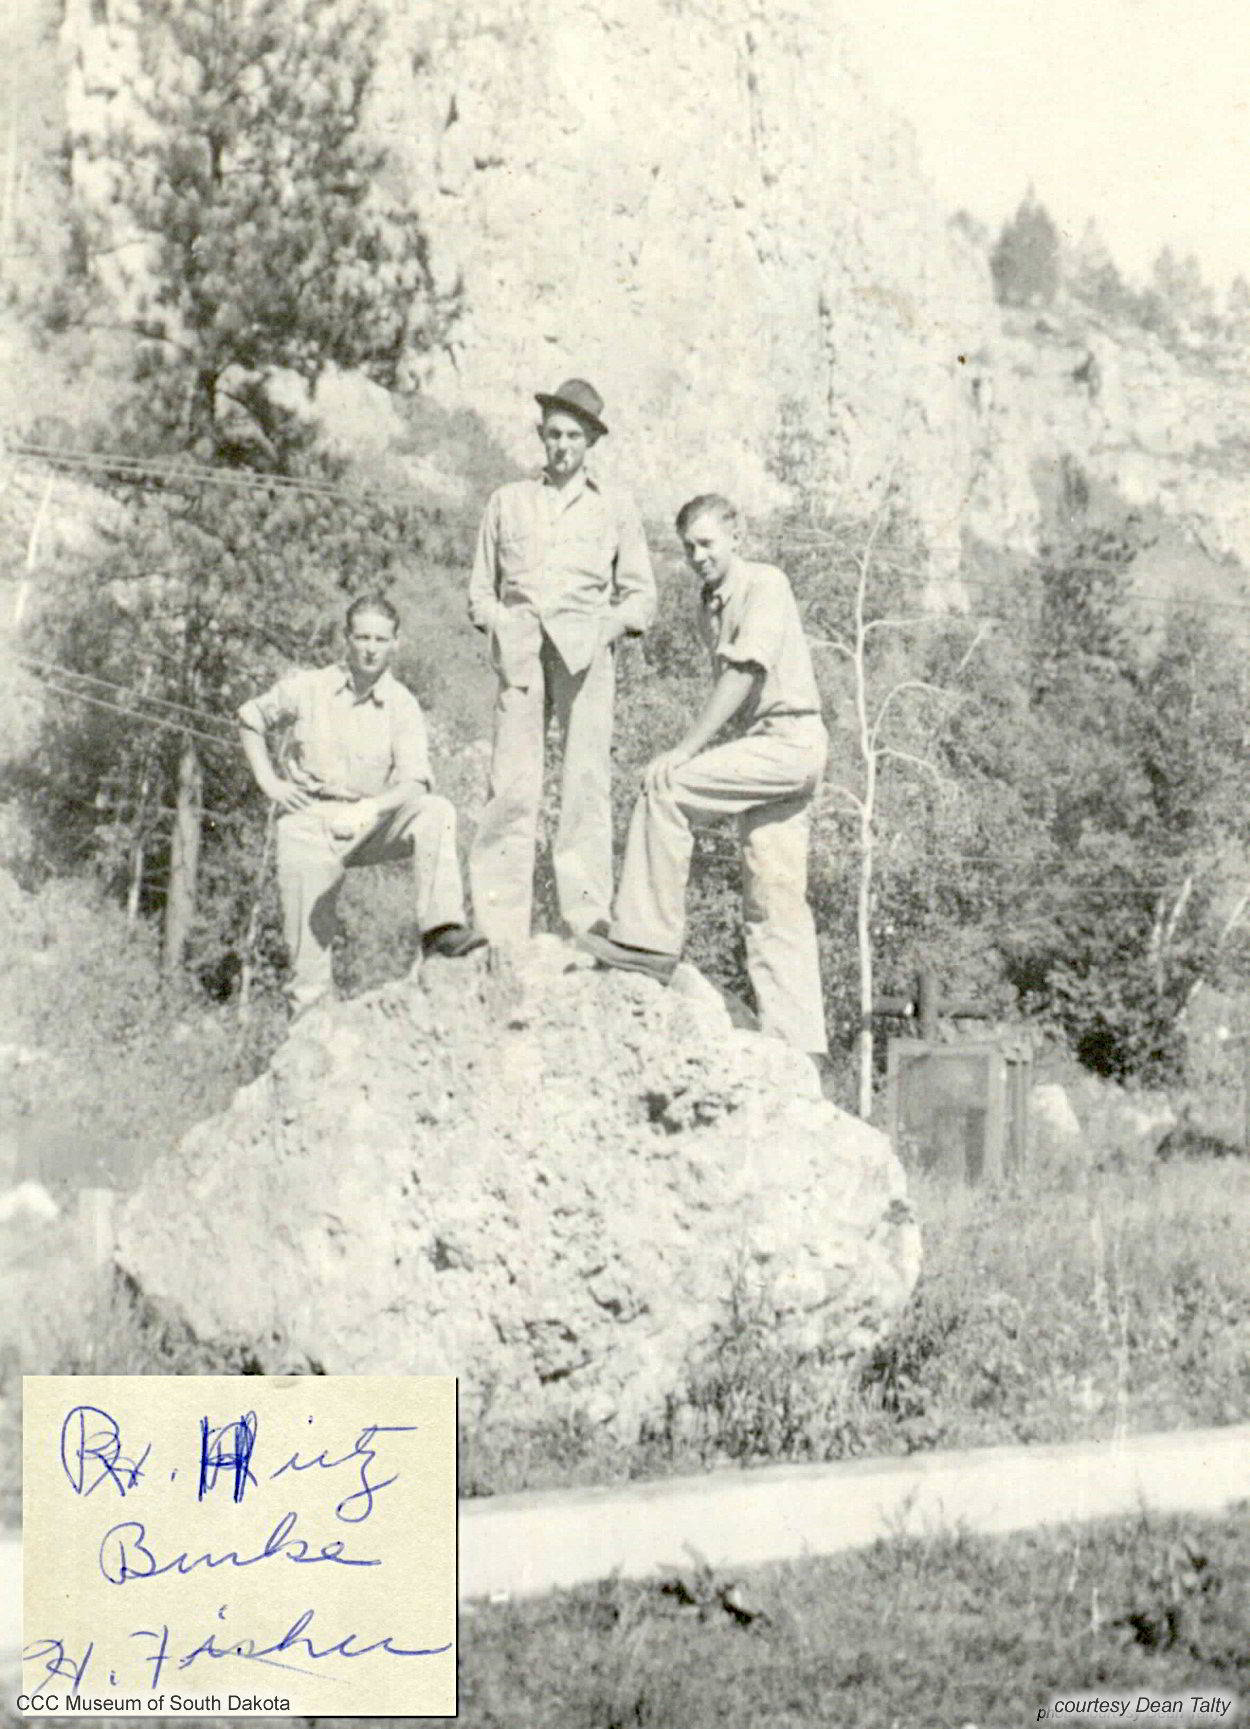 CCC Men on a Rock